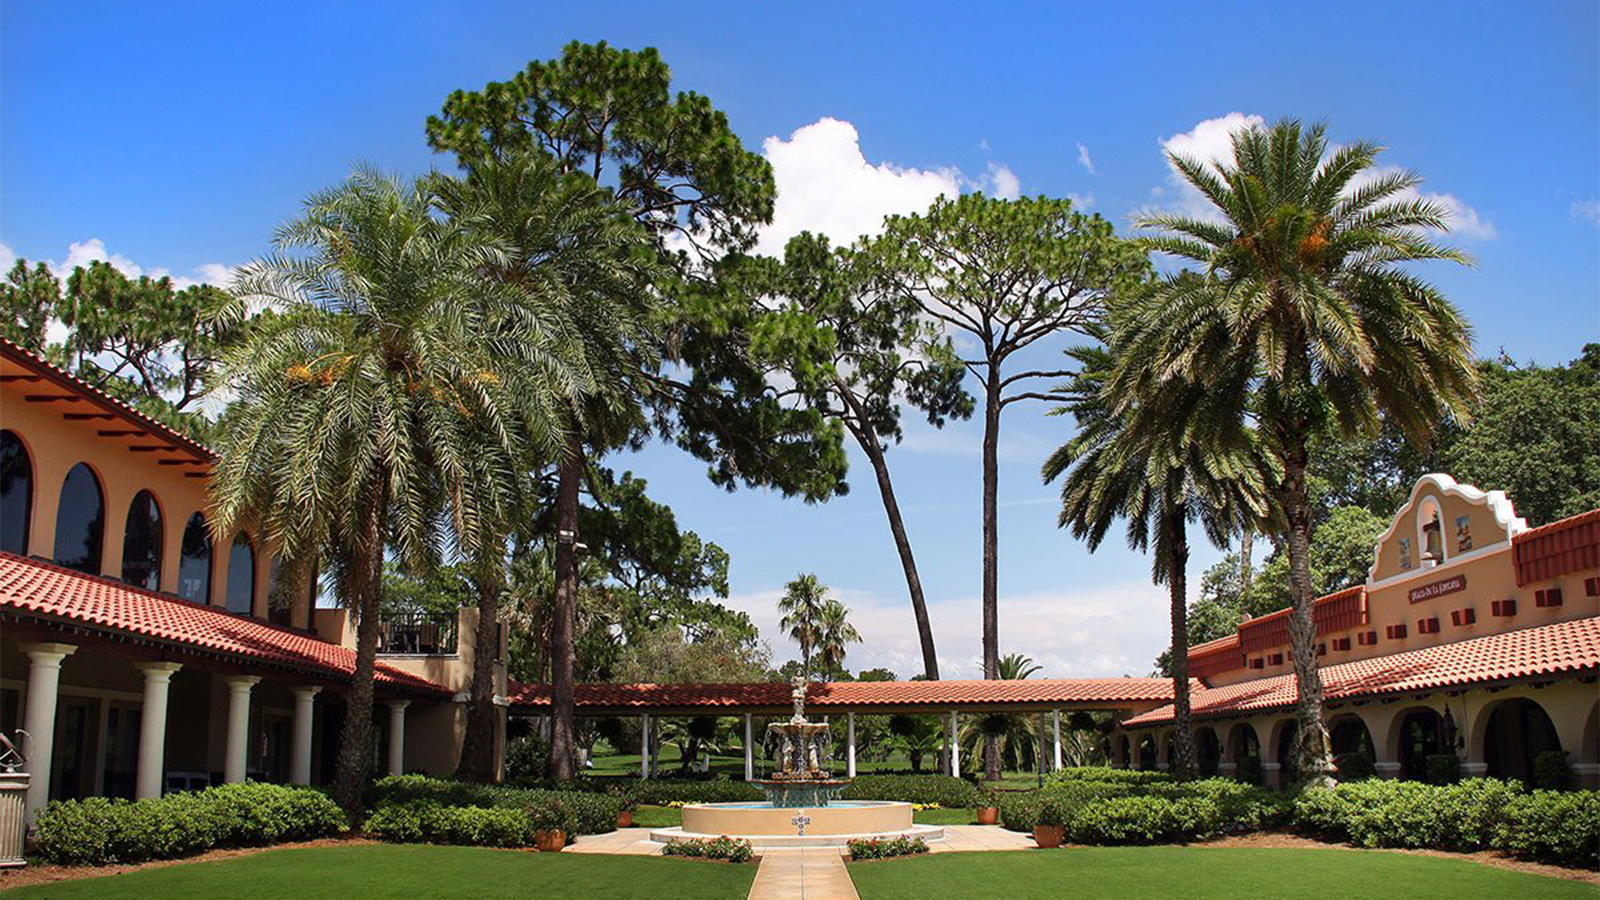 Mission Inn Resort  Club Central Florida